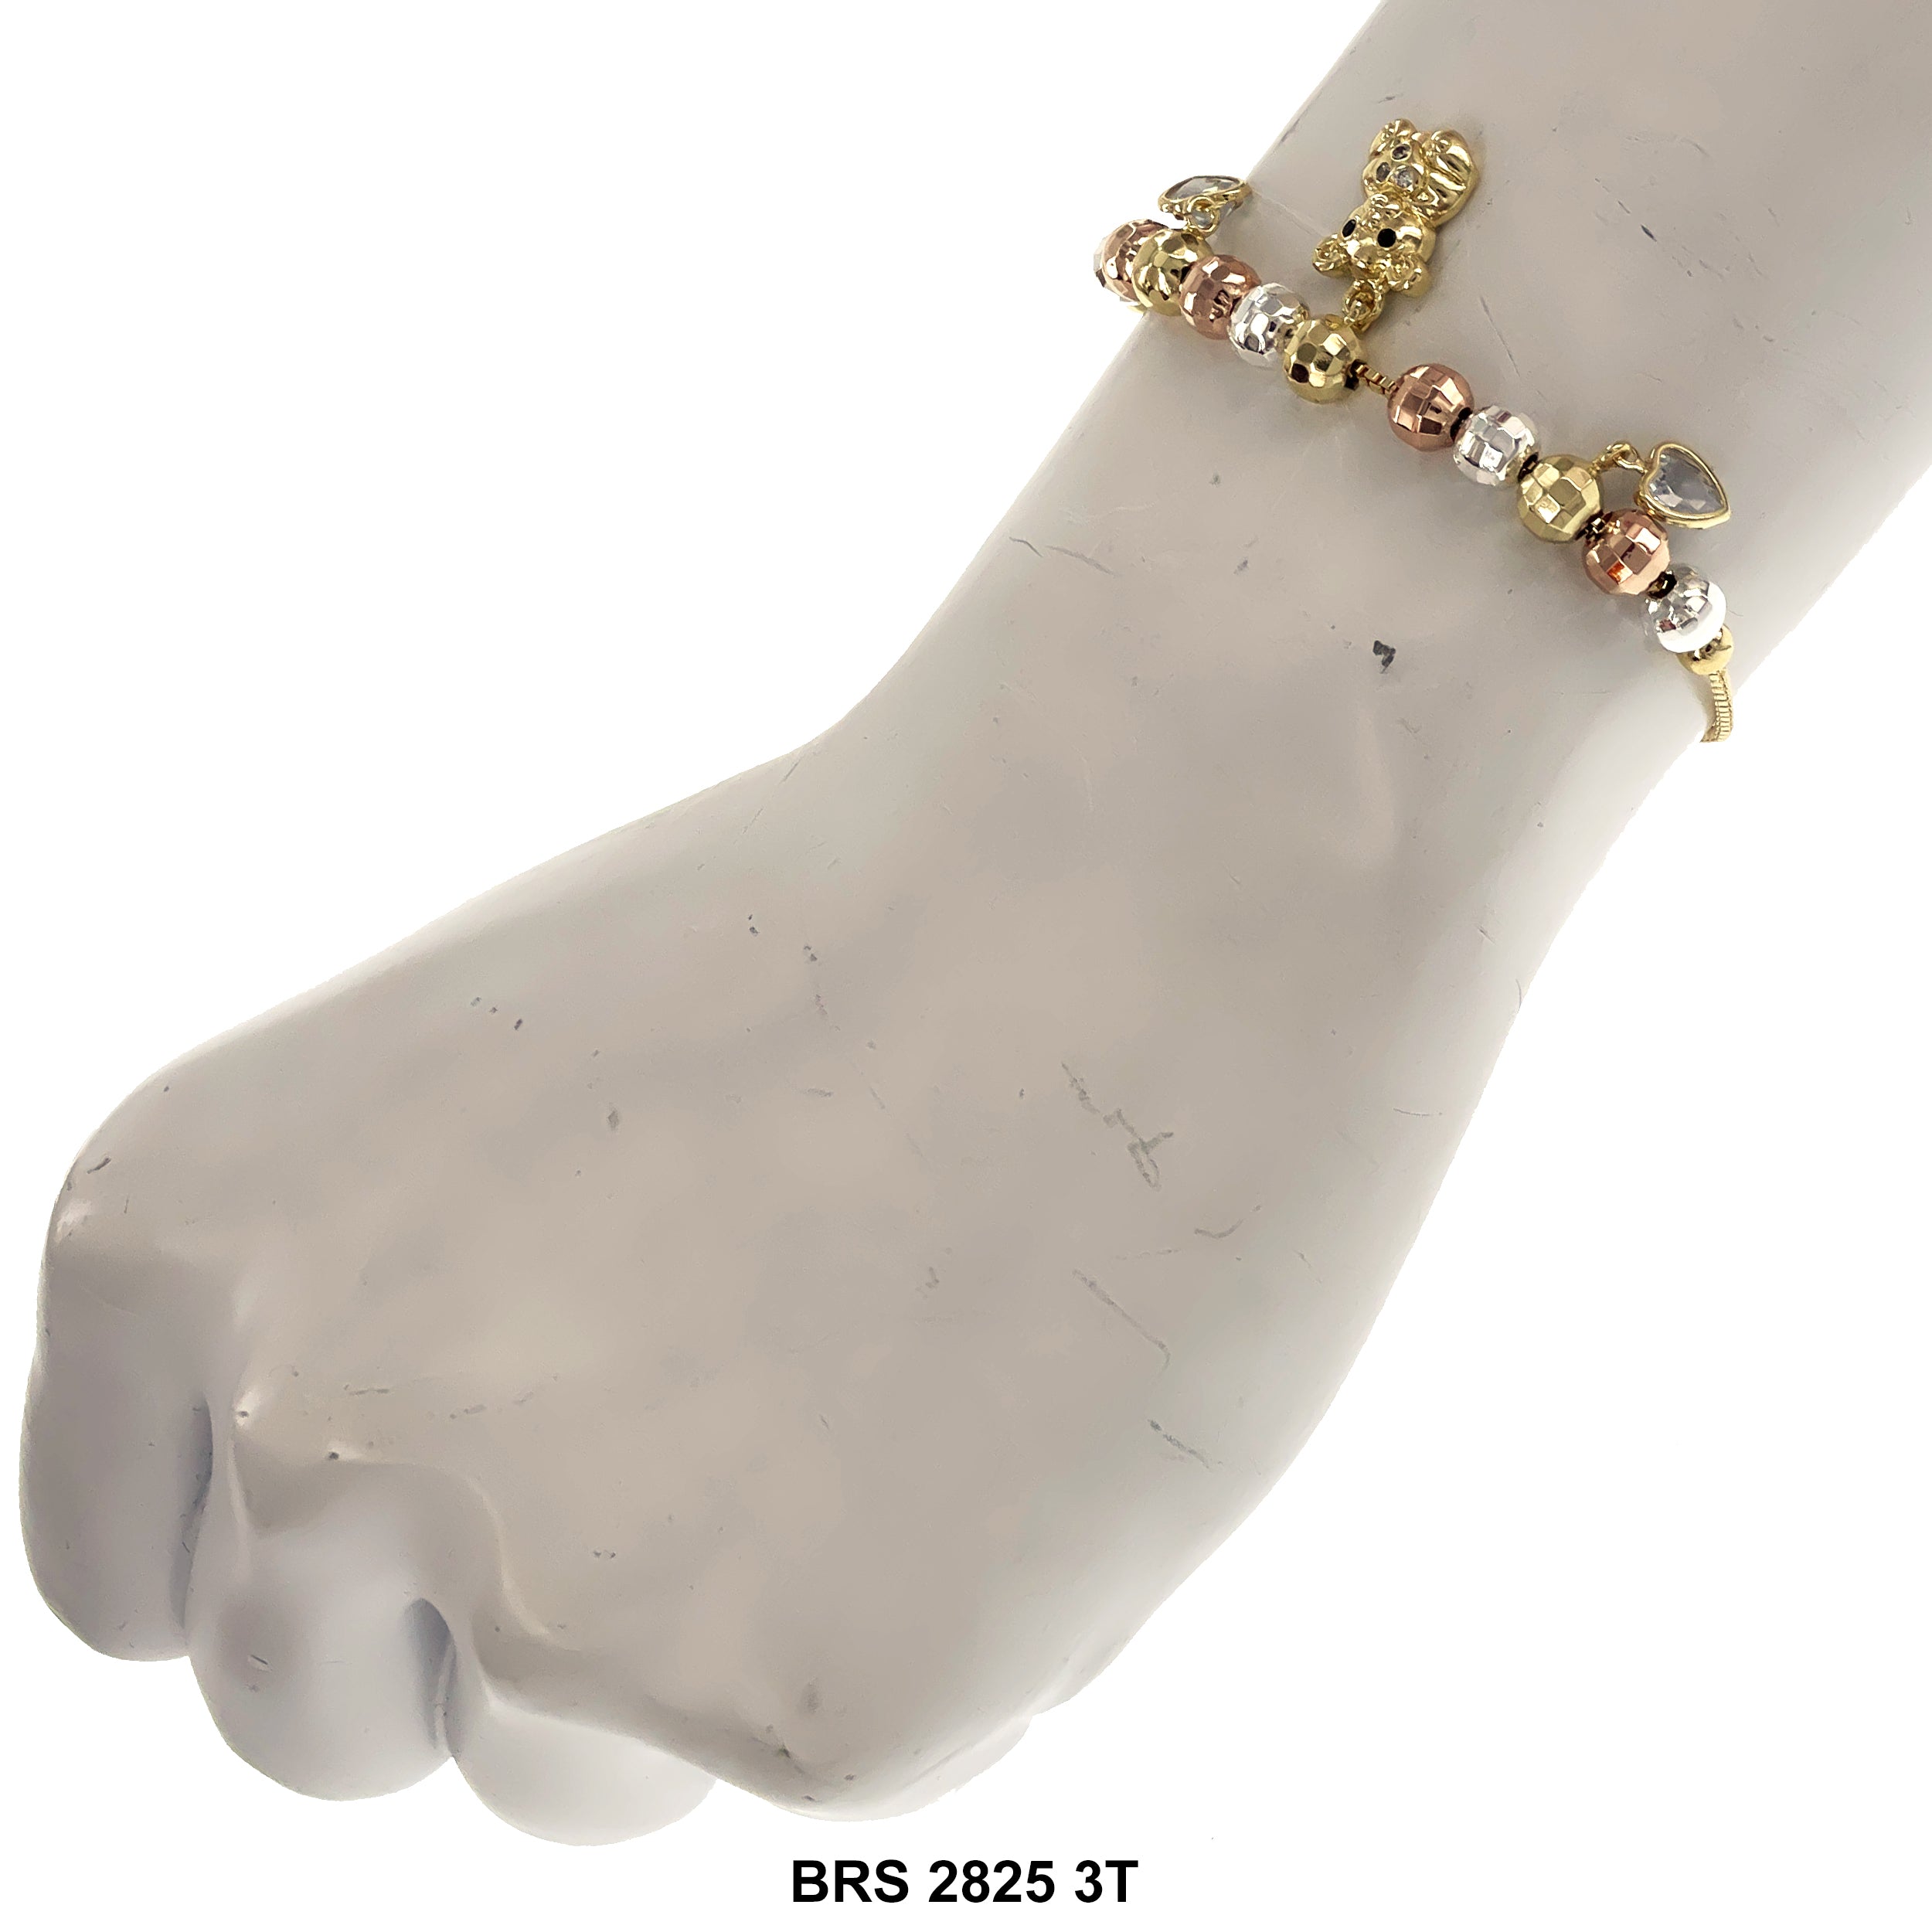 Bear Heart Stone Charms Disco Ball Beads Adjustable Bracelet BRS 2825 3T